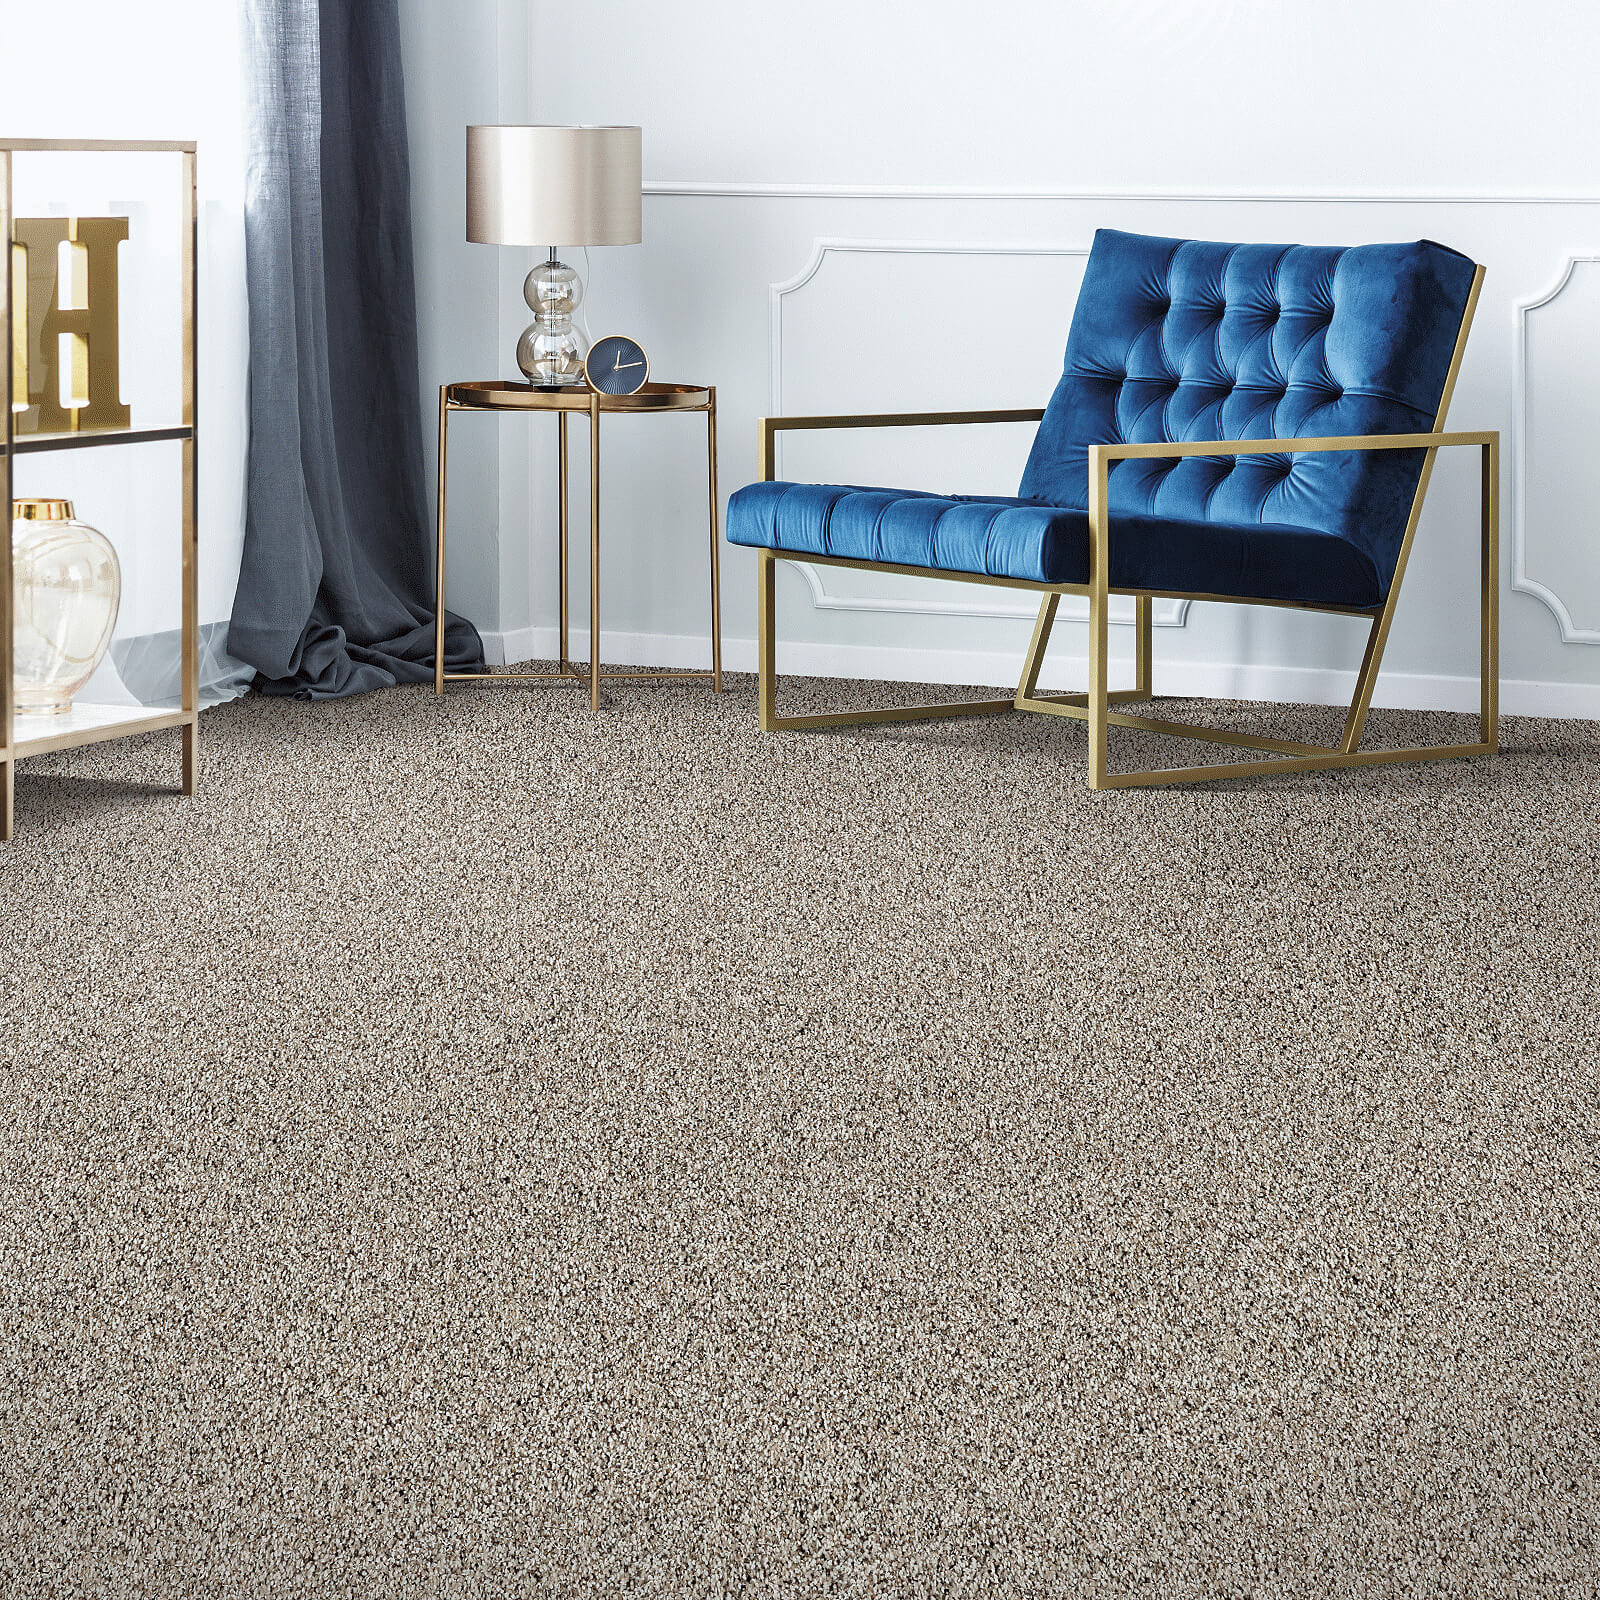 Carpet flooring | Wellston Decorating Center, Inc.